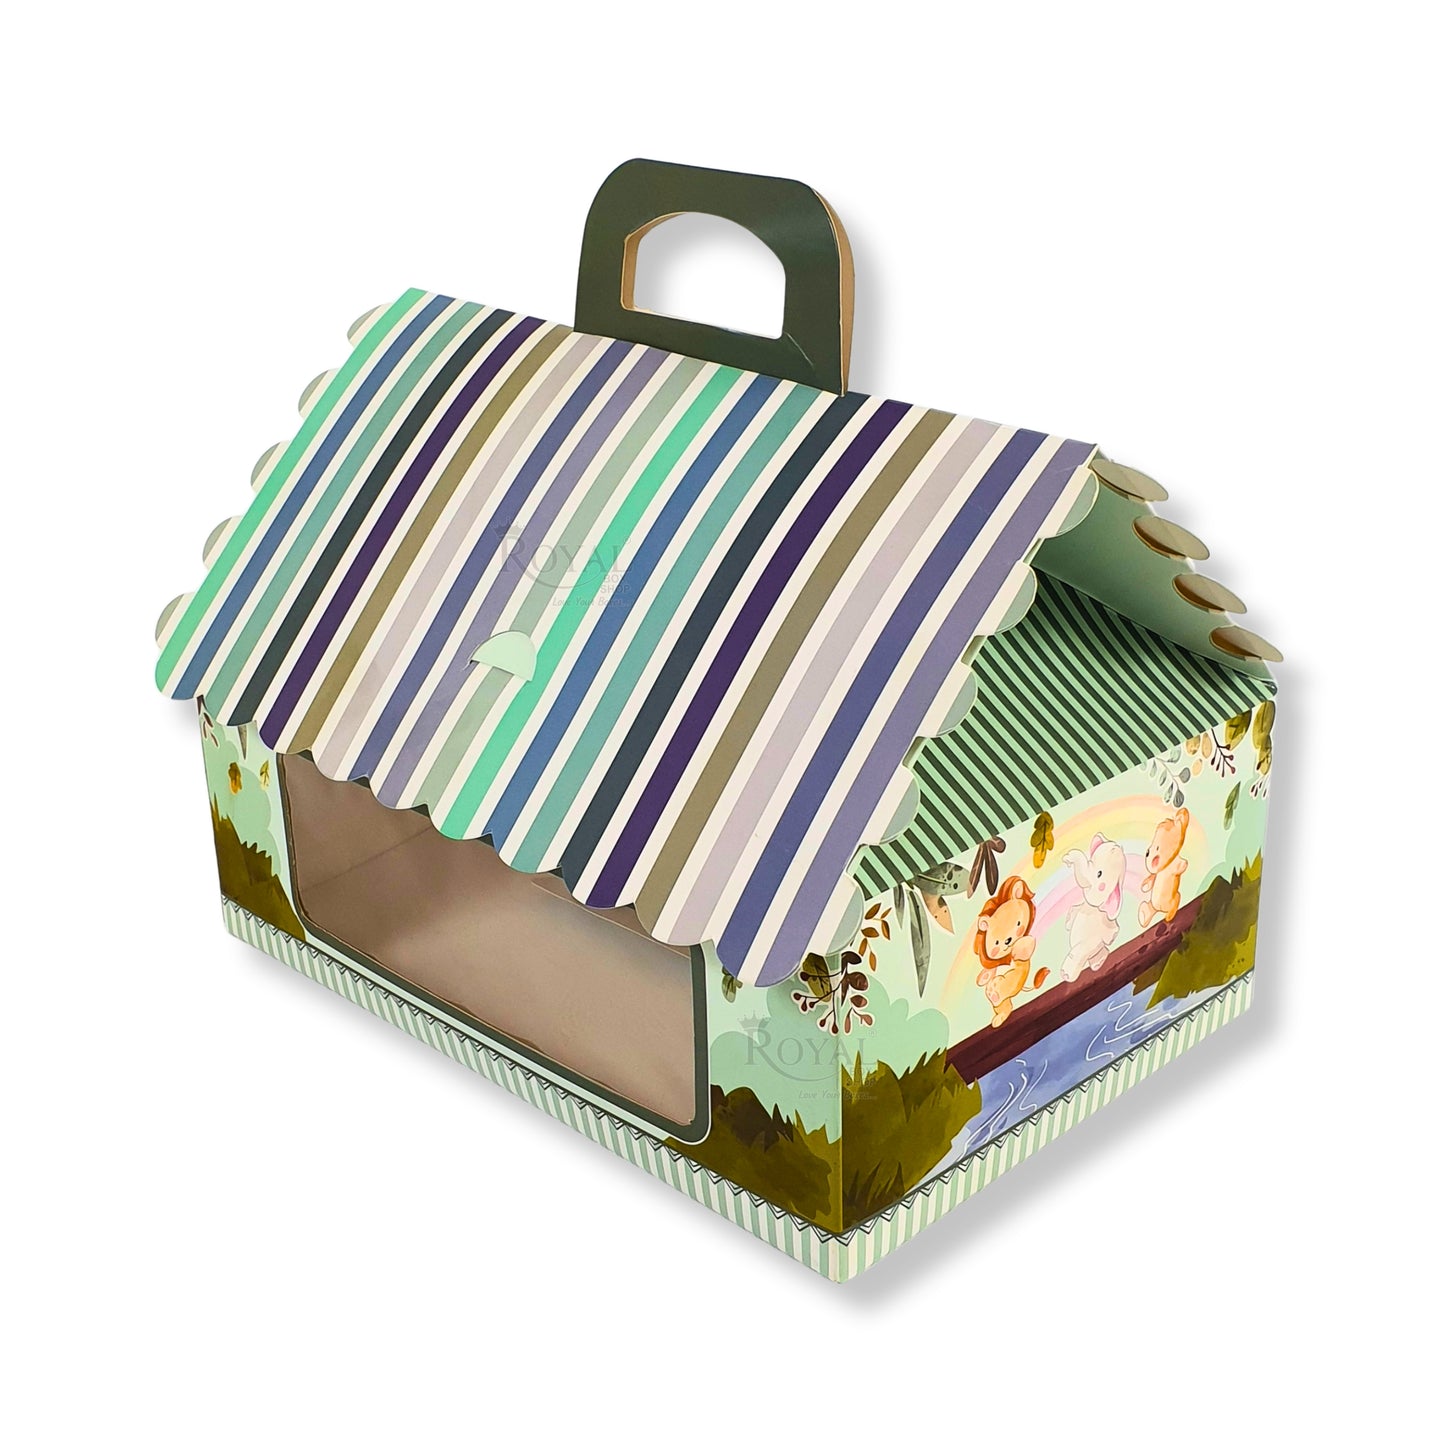 Jungle Theme Hut Gift Box - 10 x 6.75 x 3.75 Inches